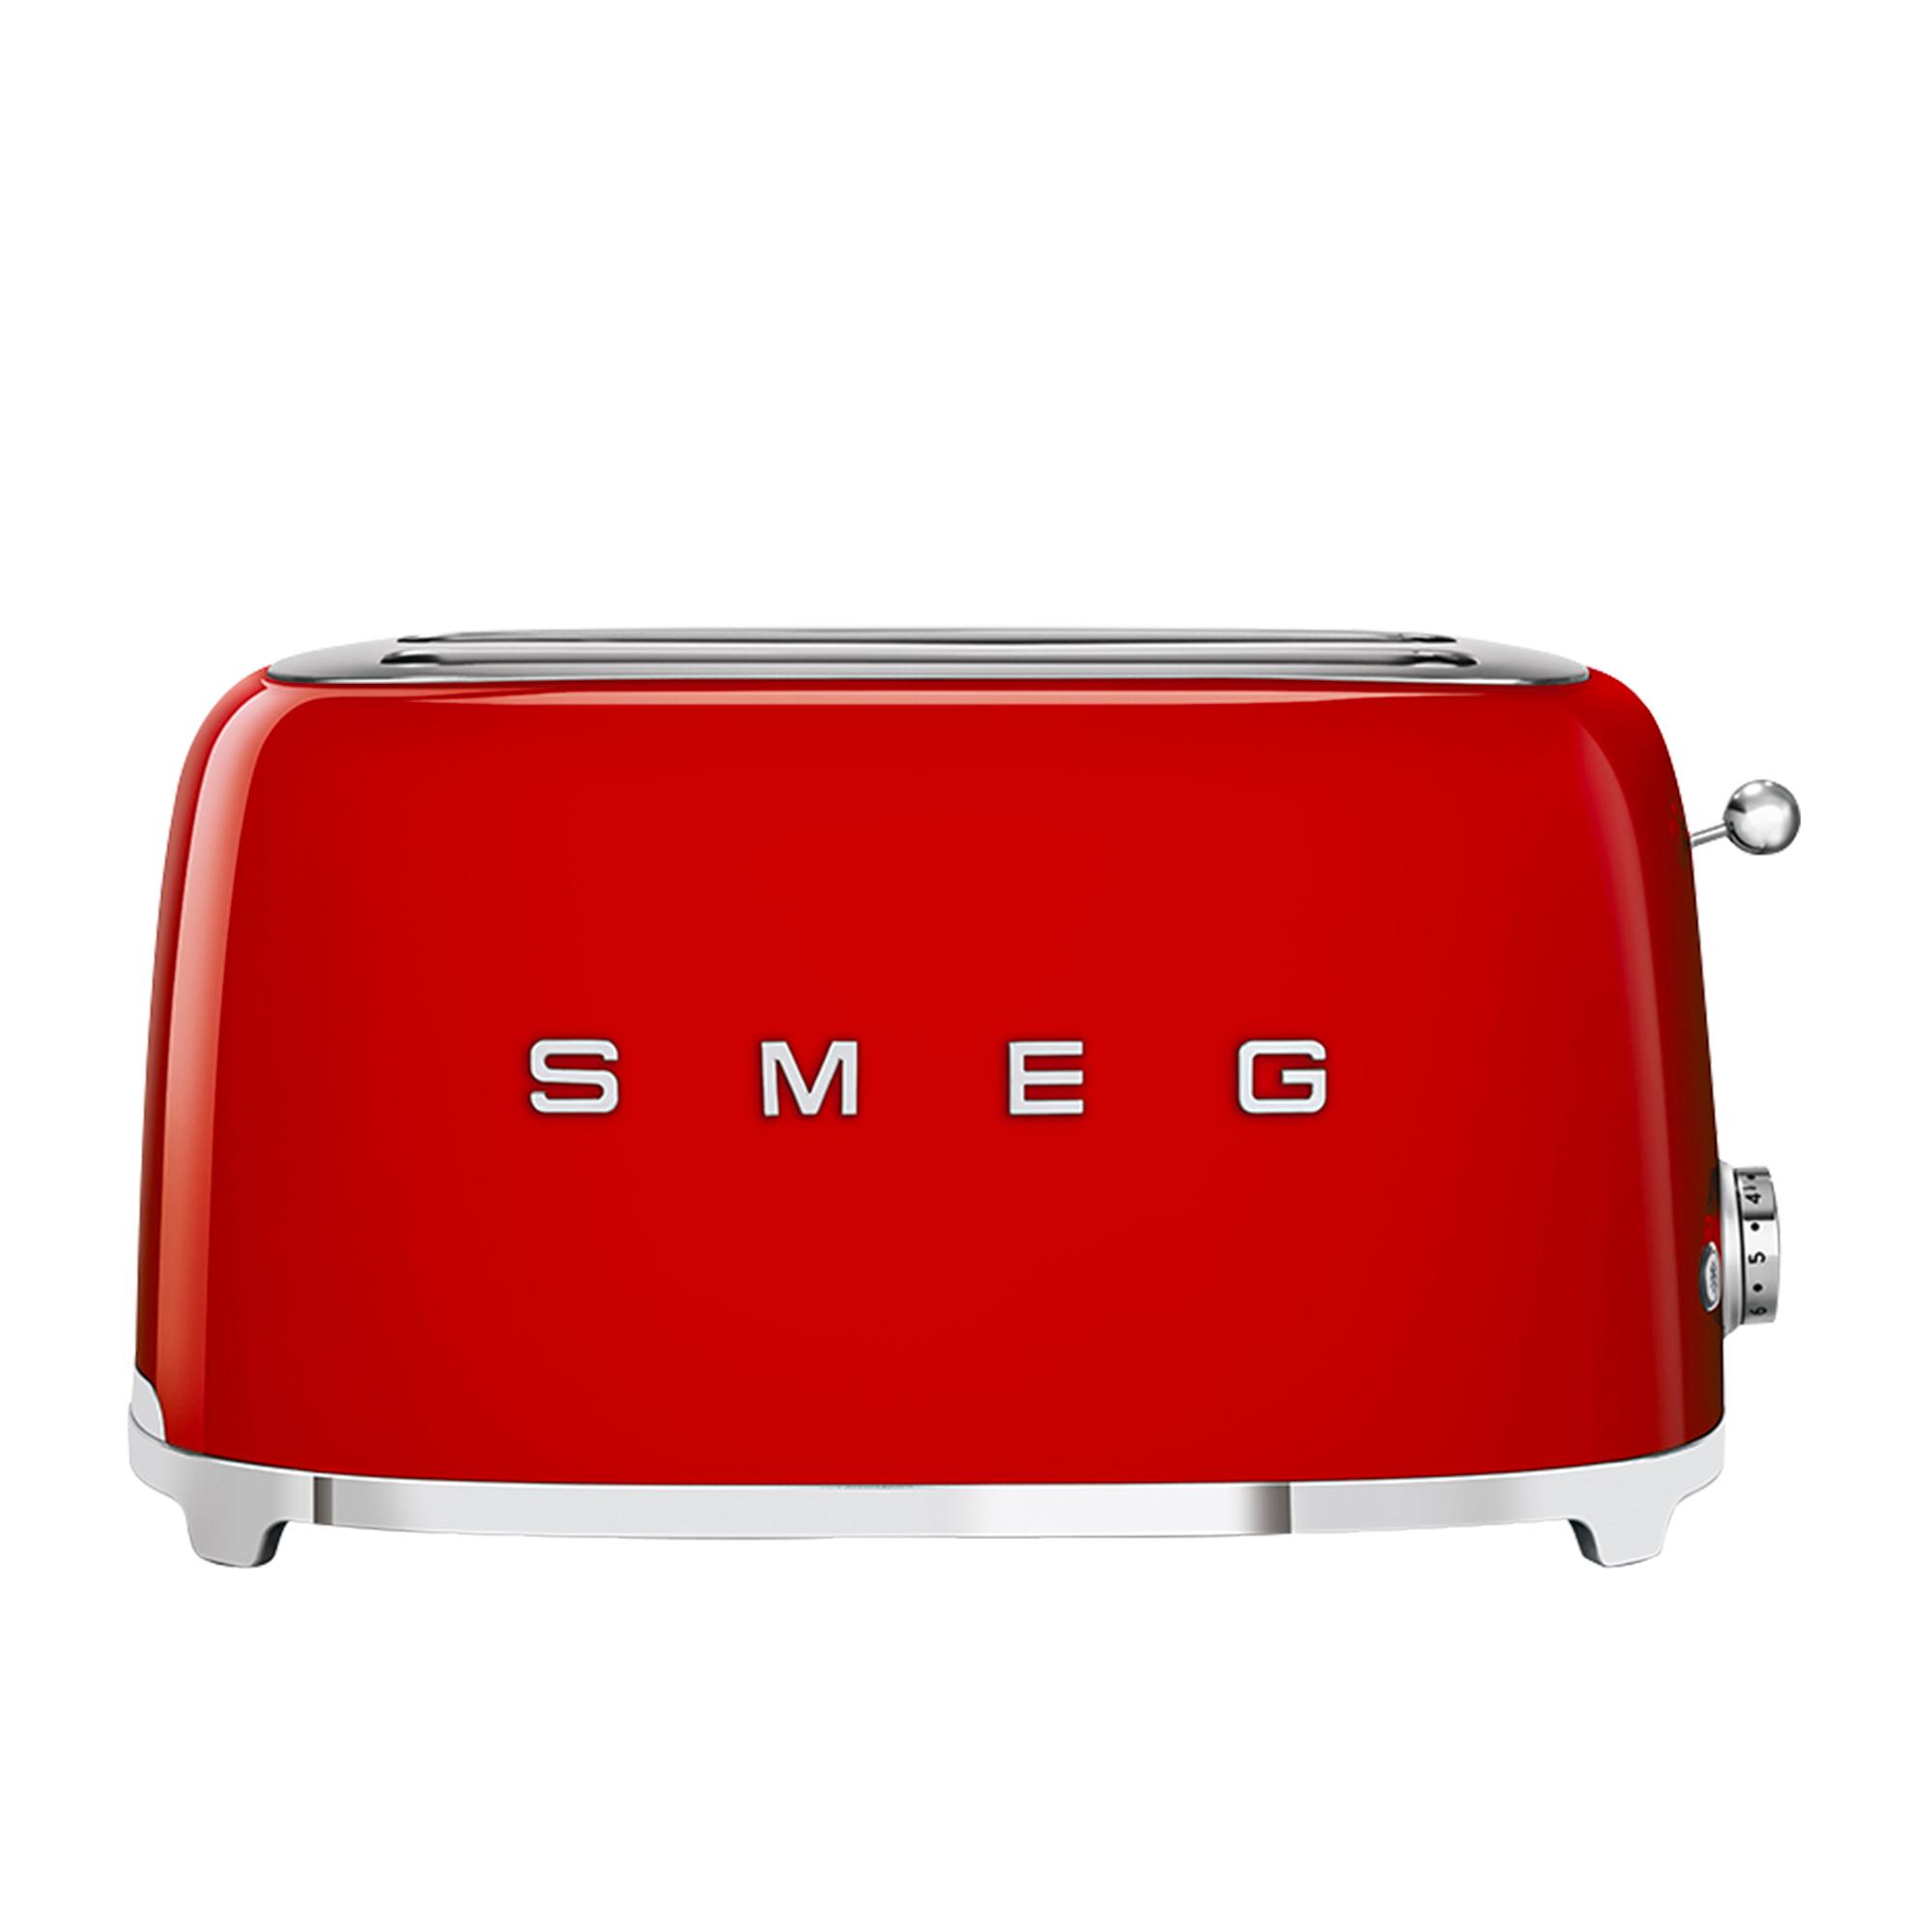 Smeg 50's Retro Style 4 Slice Toaster Red Image 5